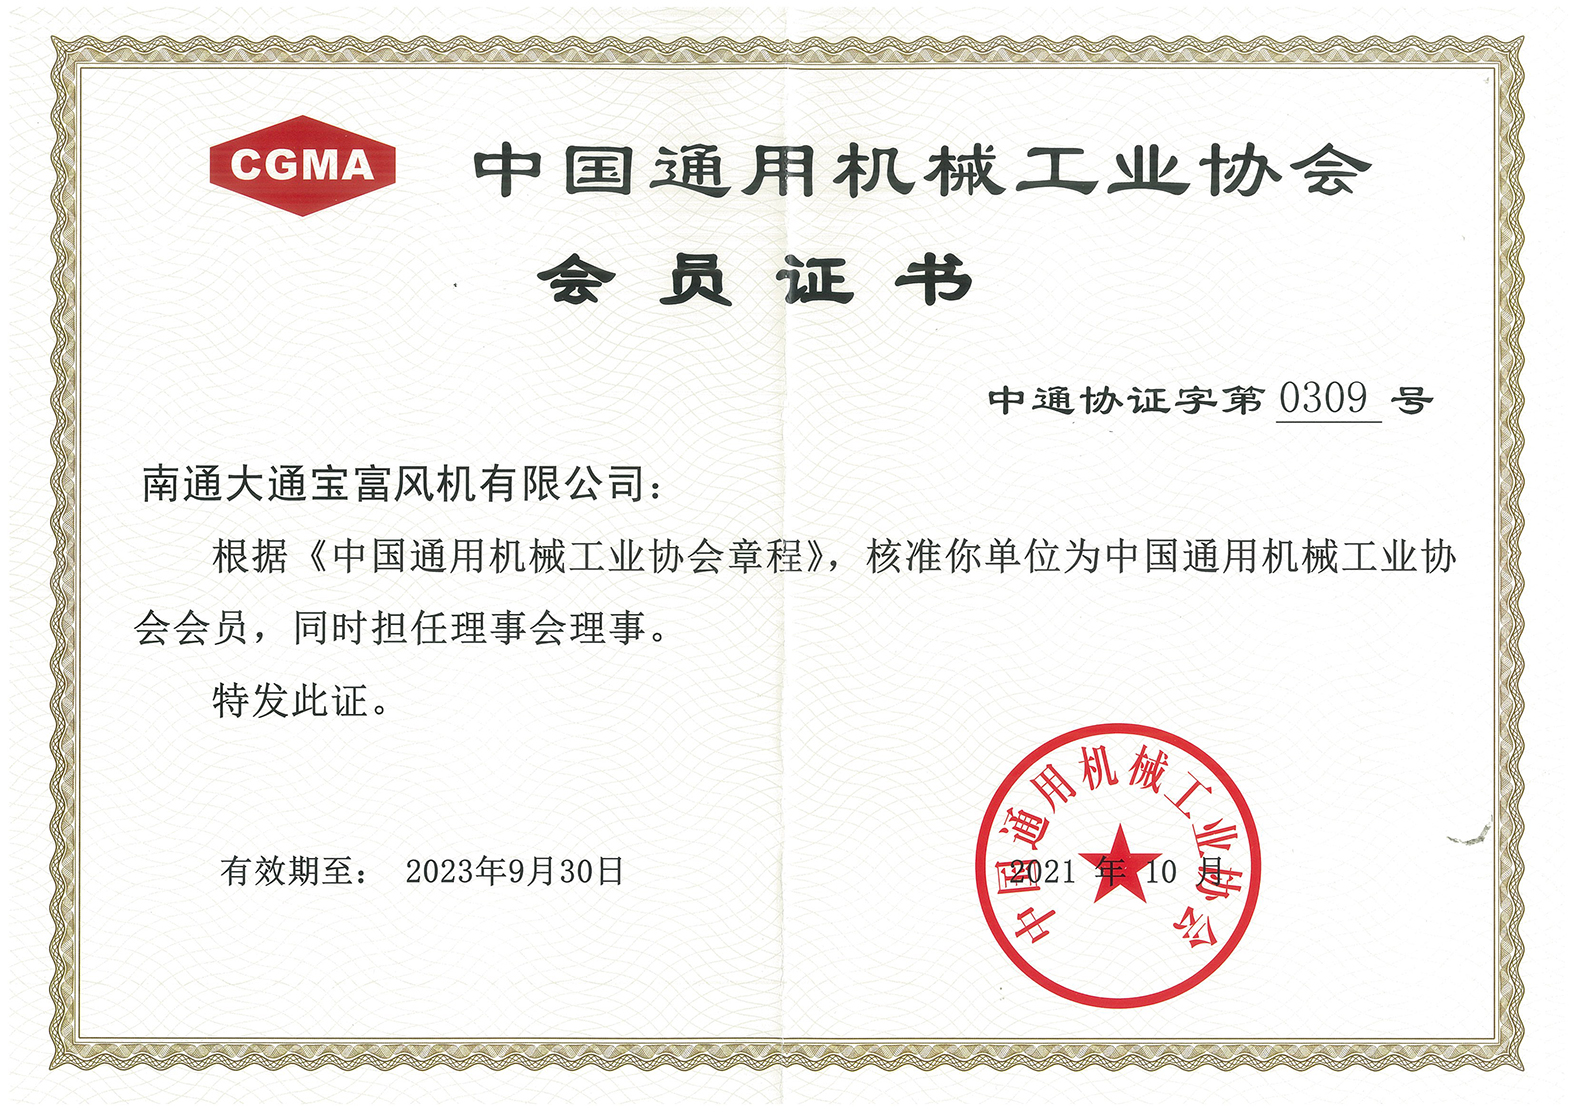 China General Machinery Industry Association fan branch member certificate